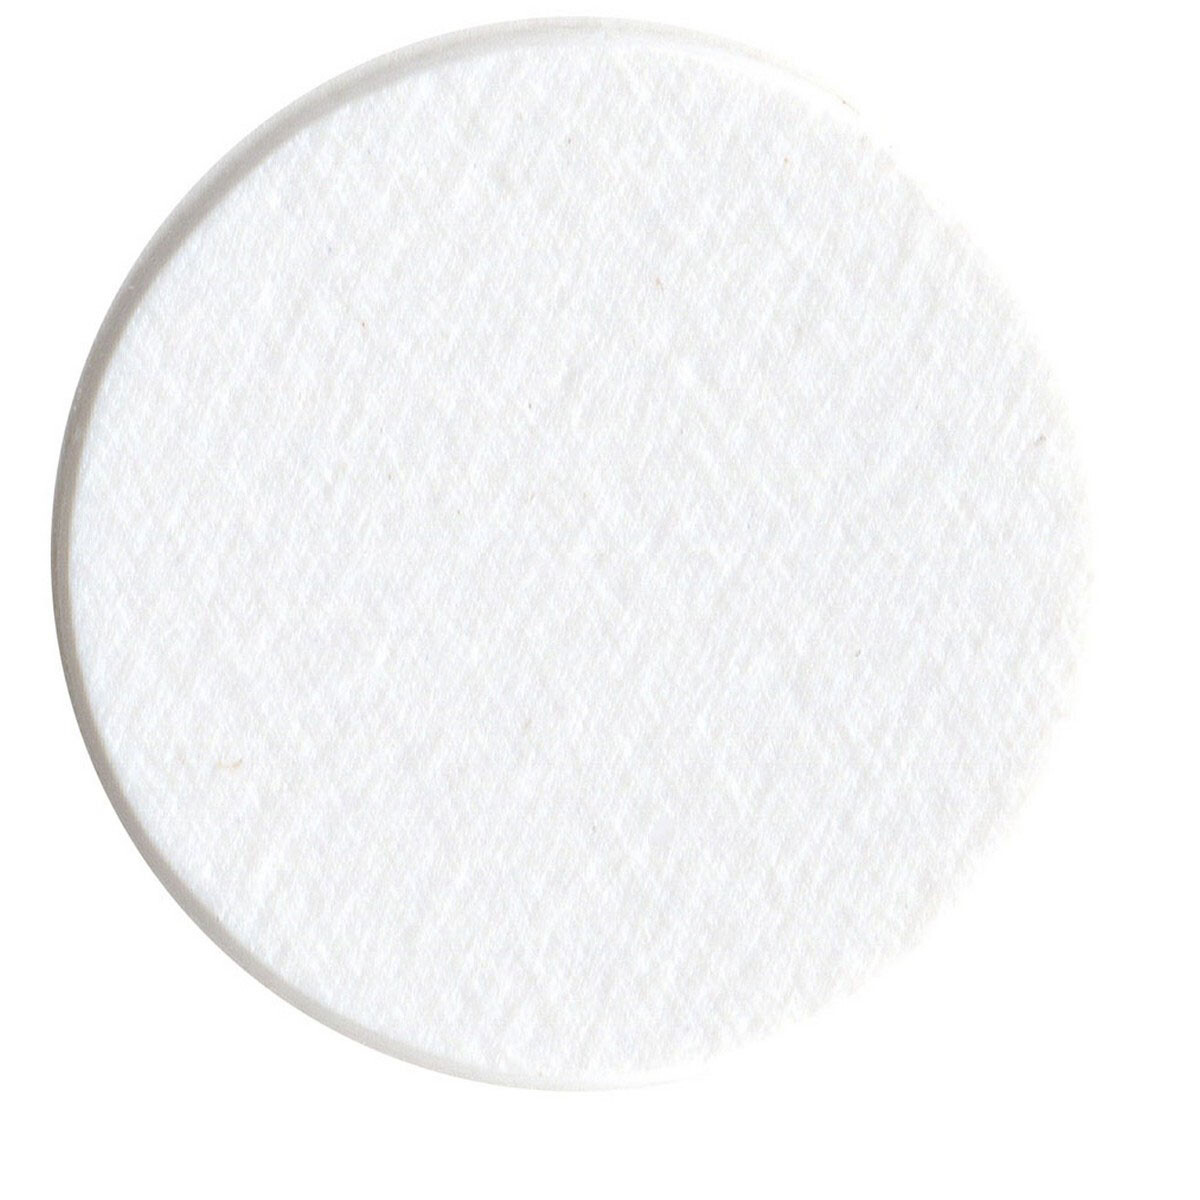 Tapatornillo adhesivo PVC 12mm x 140pz blanco 